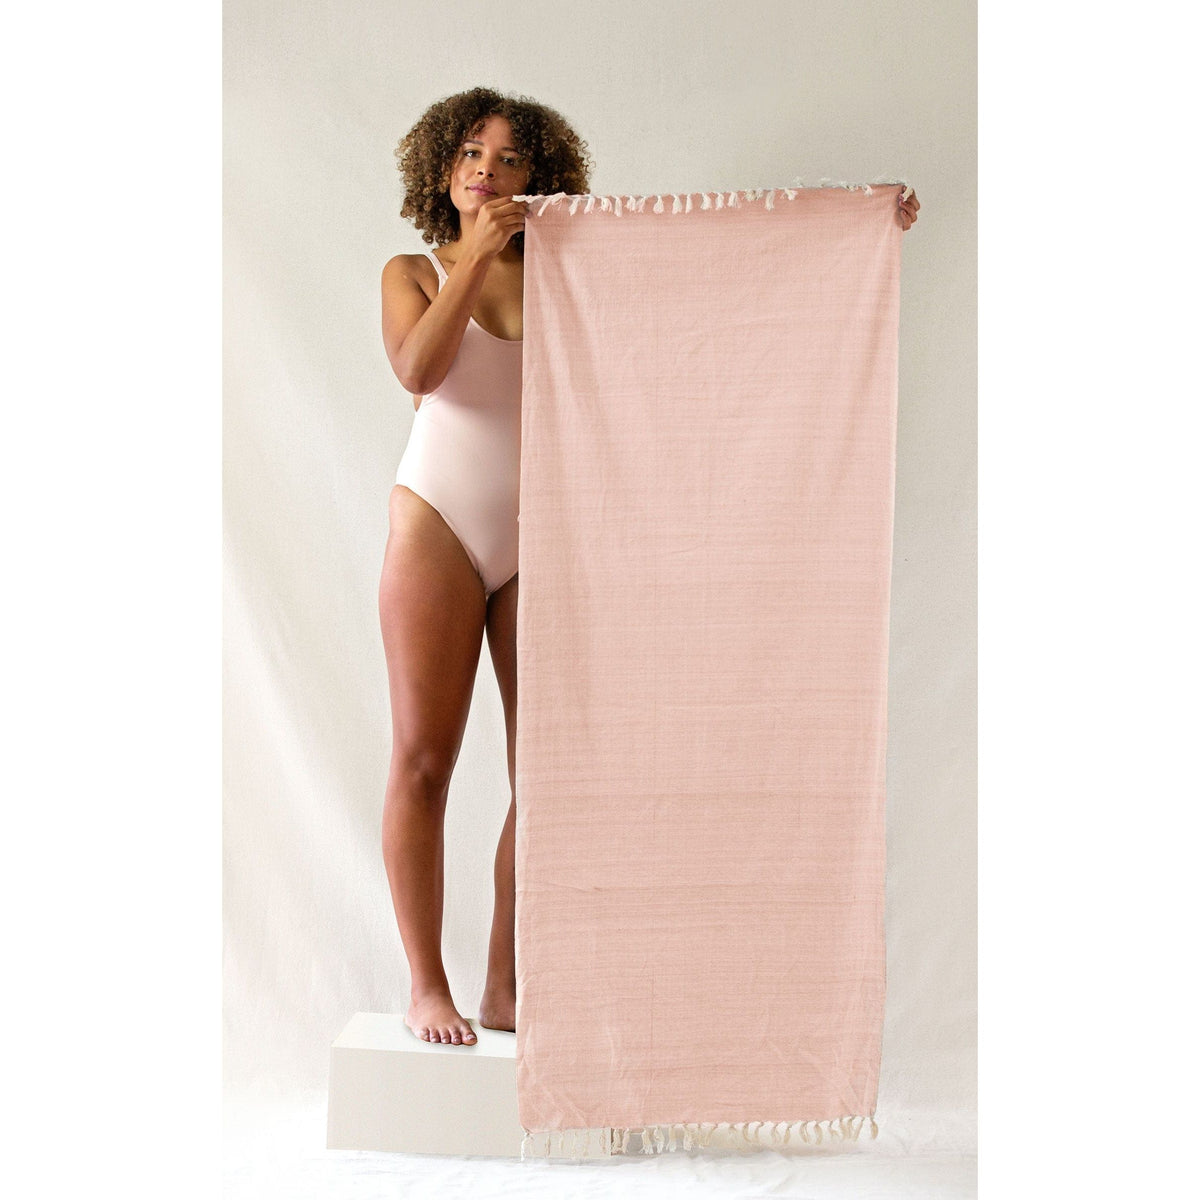 okoliving Rose Quartz Yoga Towels by okoliving